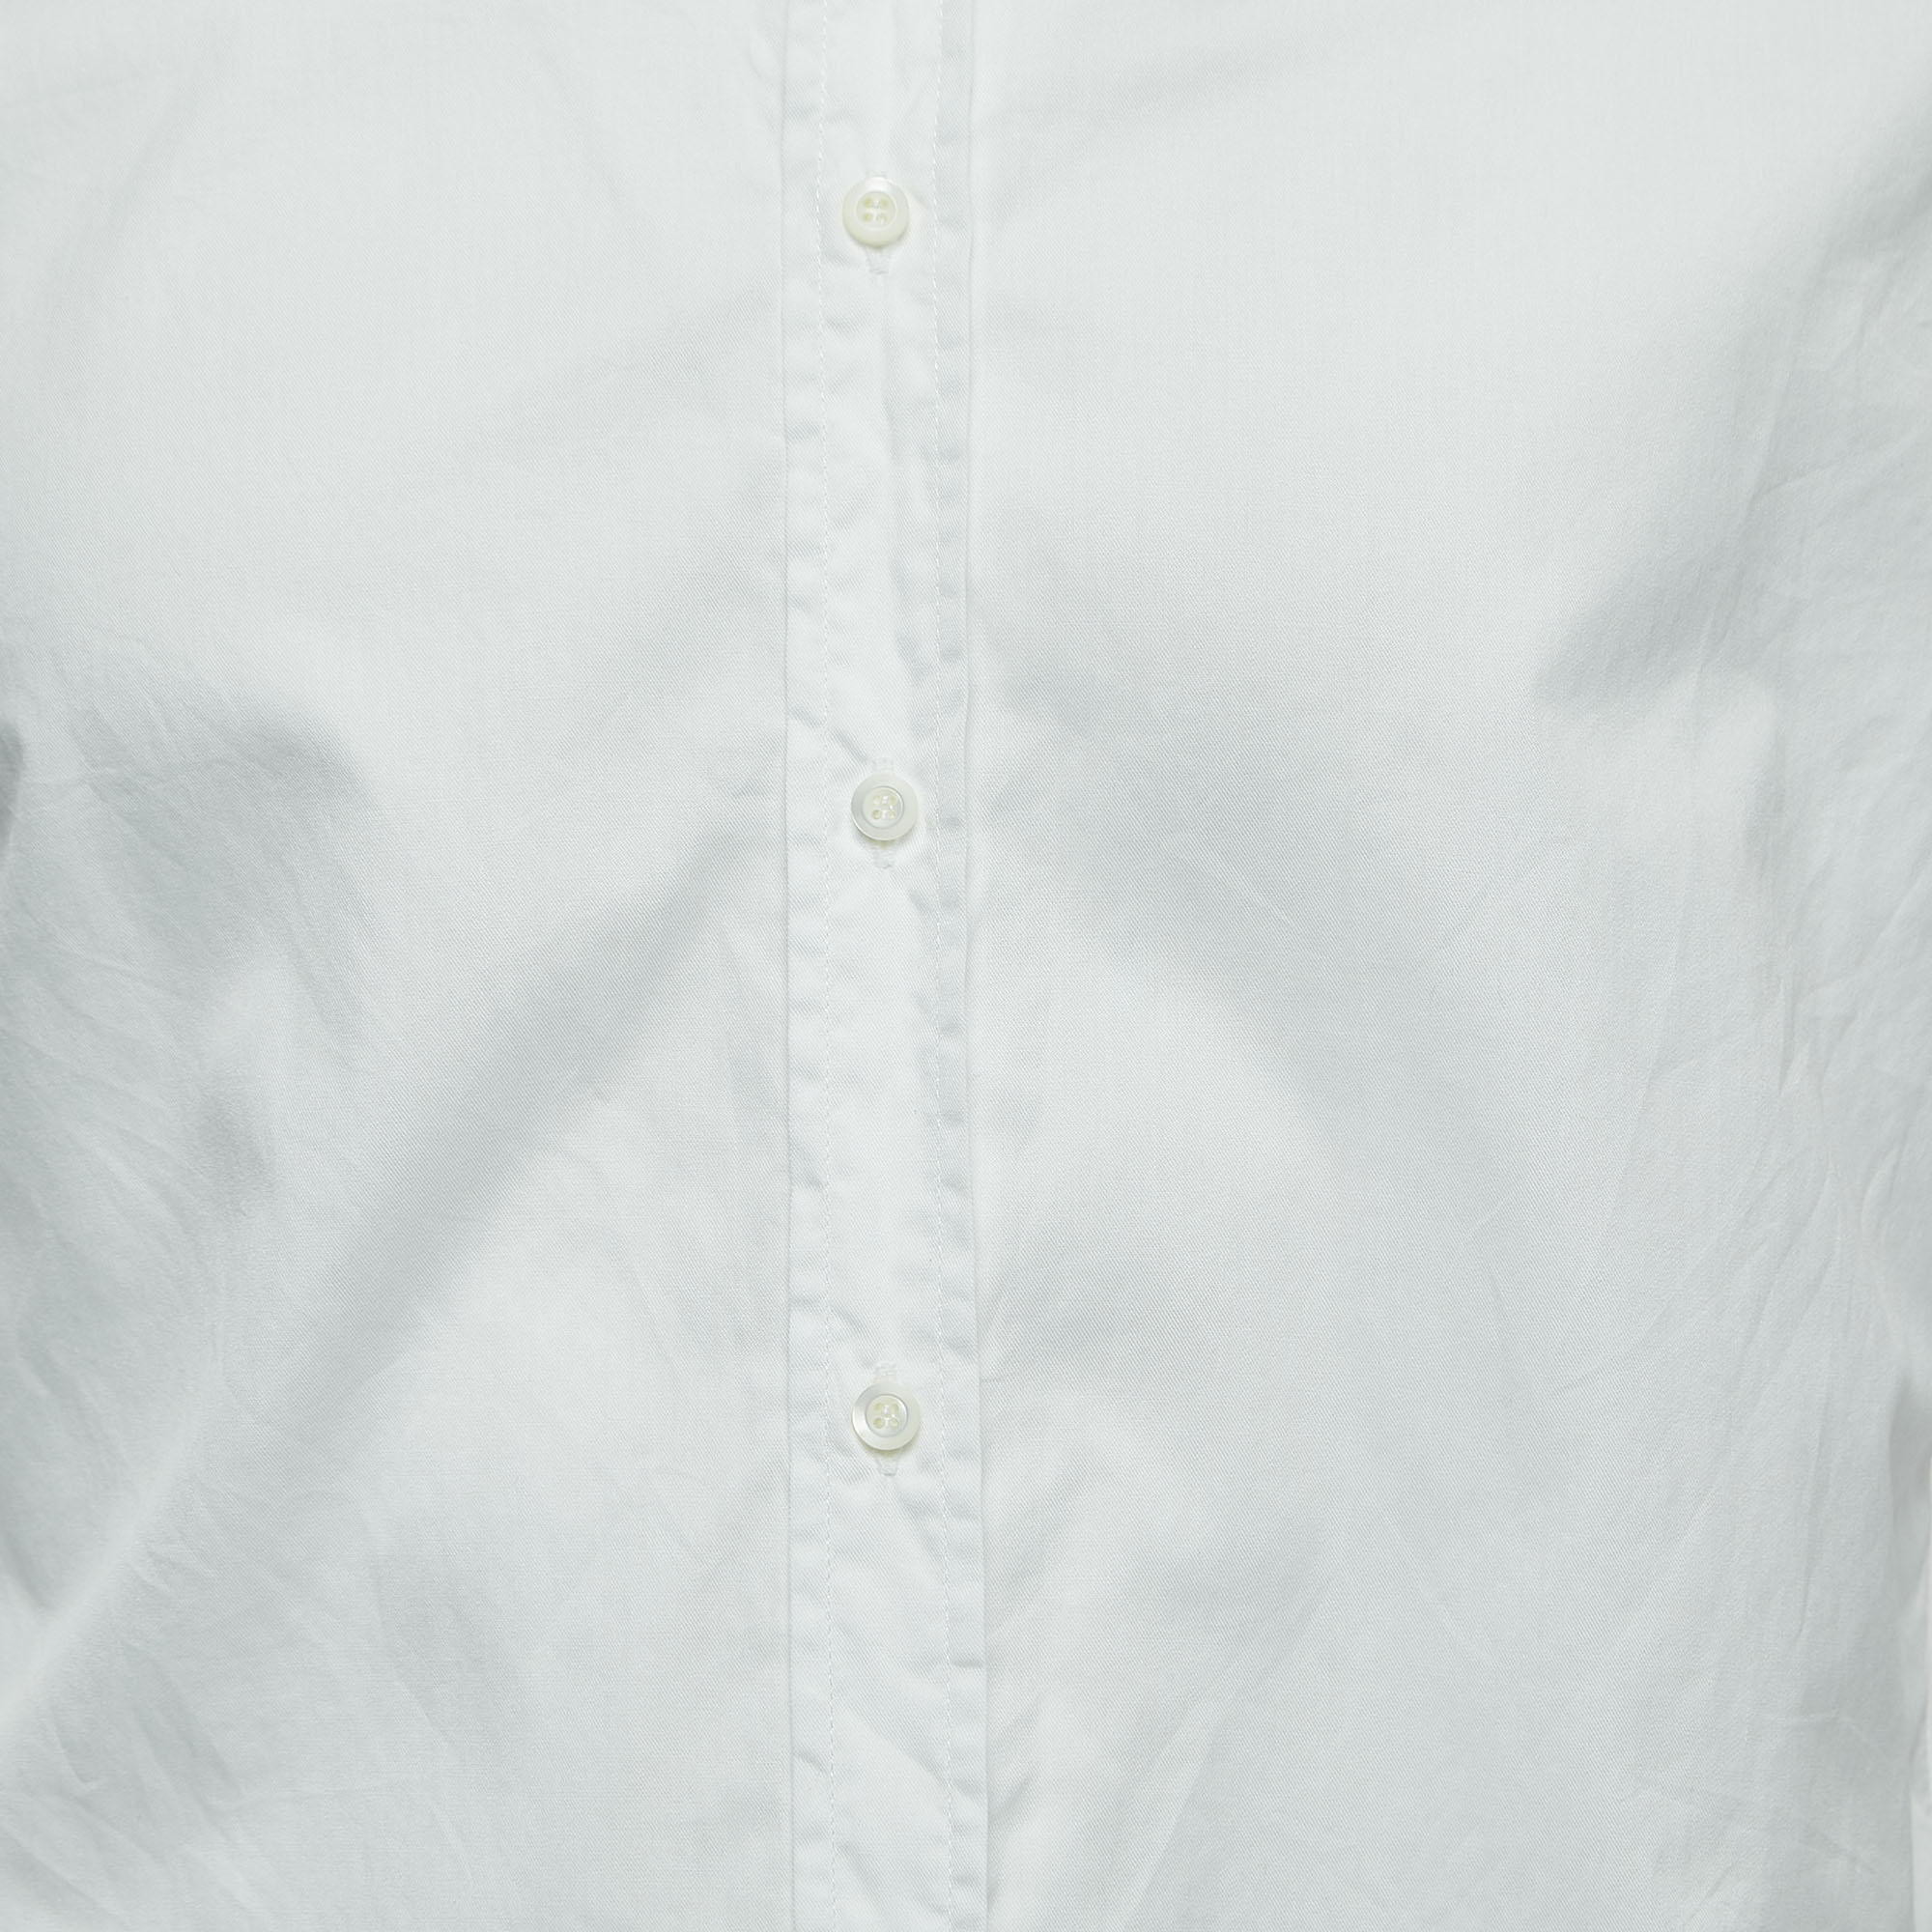 Brunello Cucinelli White Cotton Leisure Fit Full Sleeve Shirt M